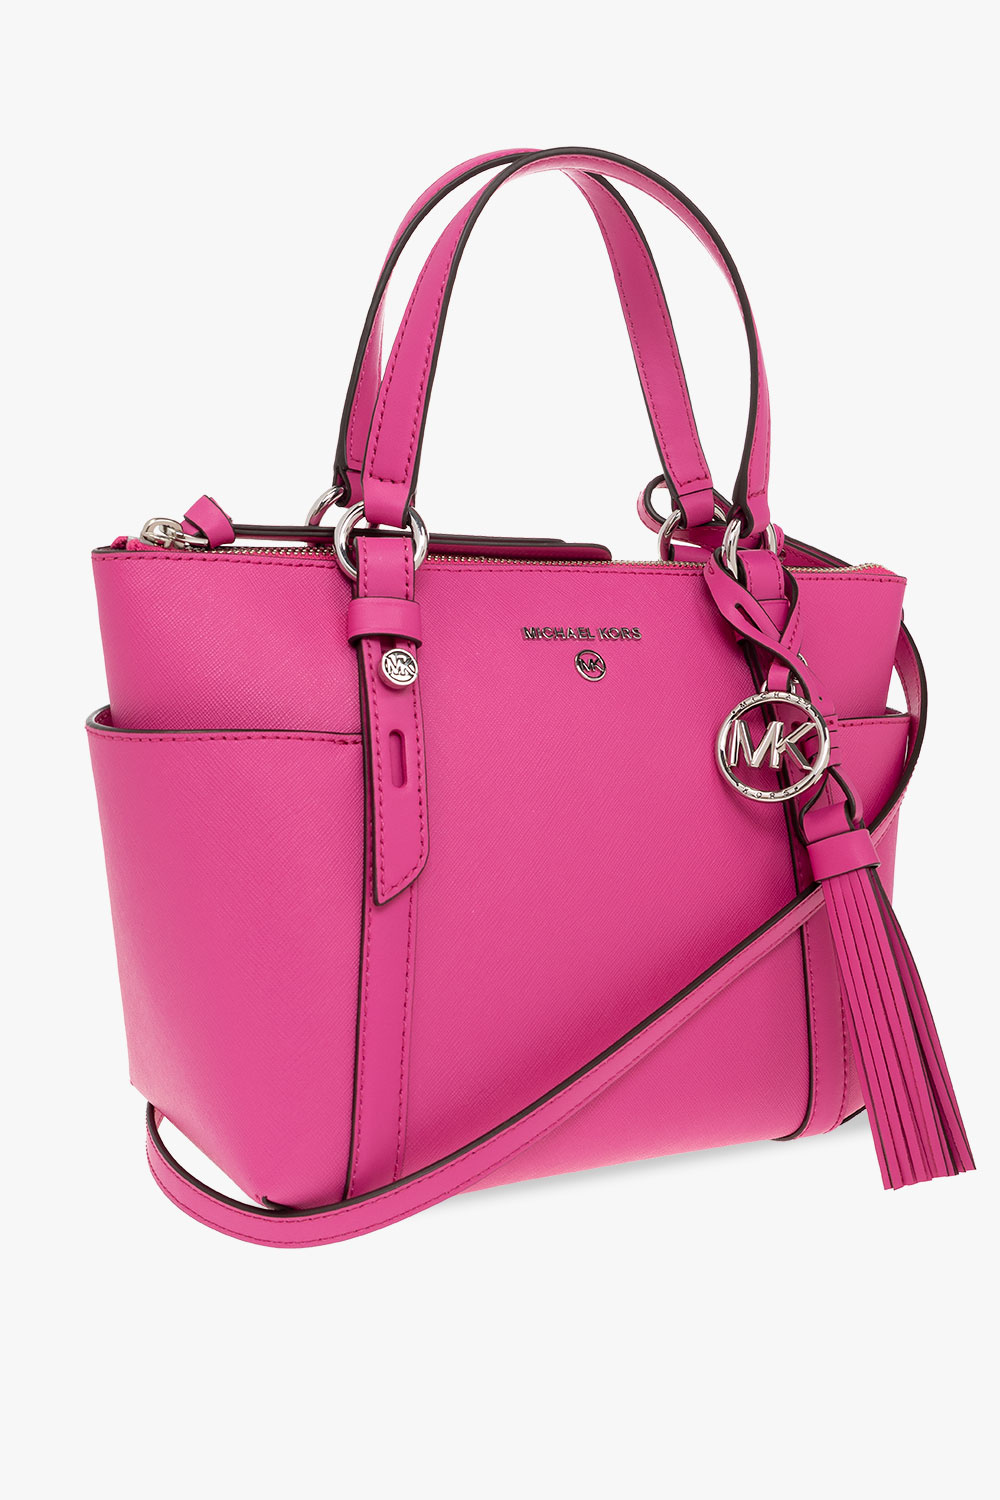 Michael Kors Sullivan Small Saffiano Leather Tote Bag In Pink